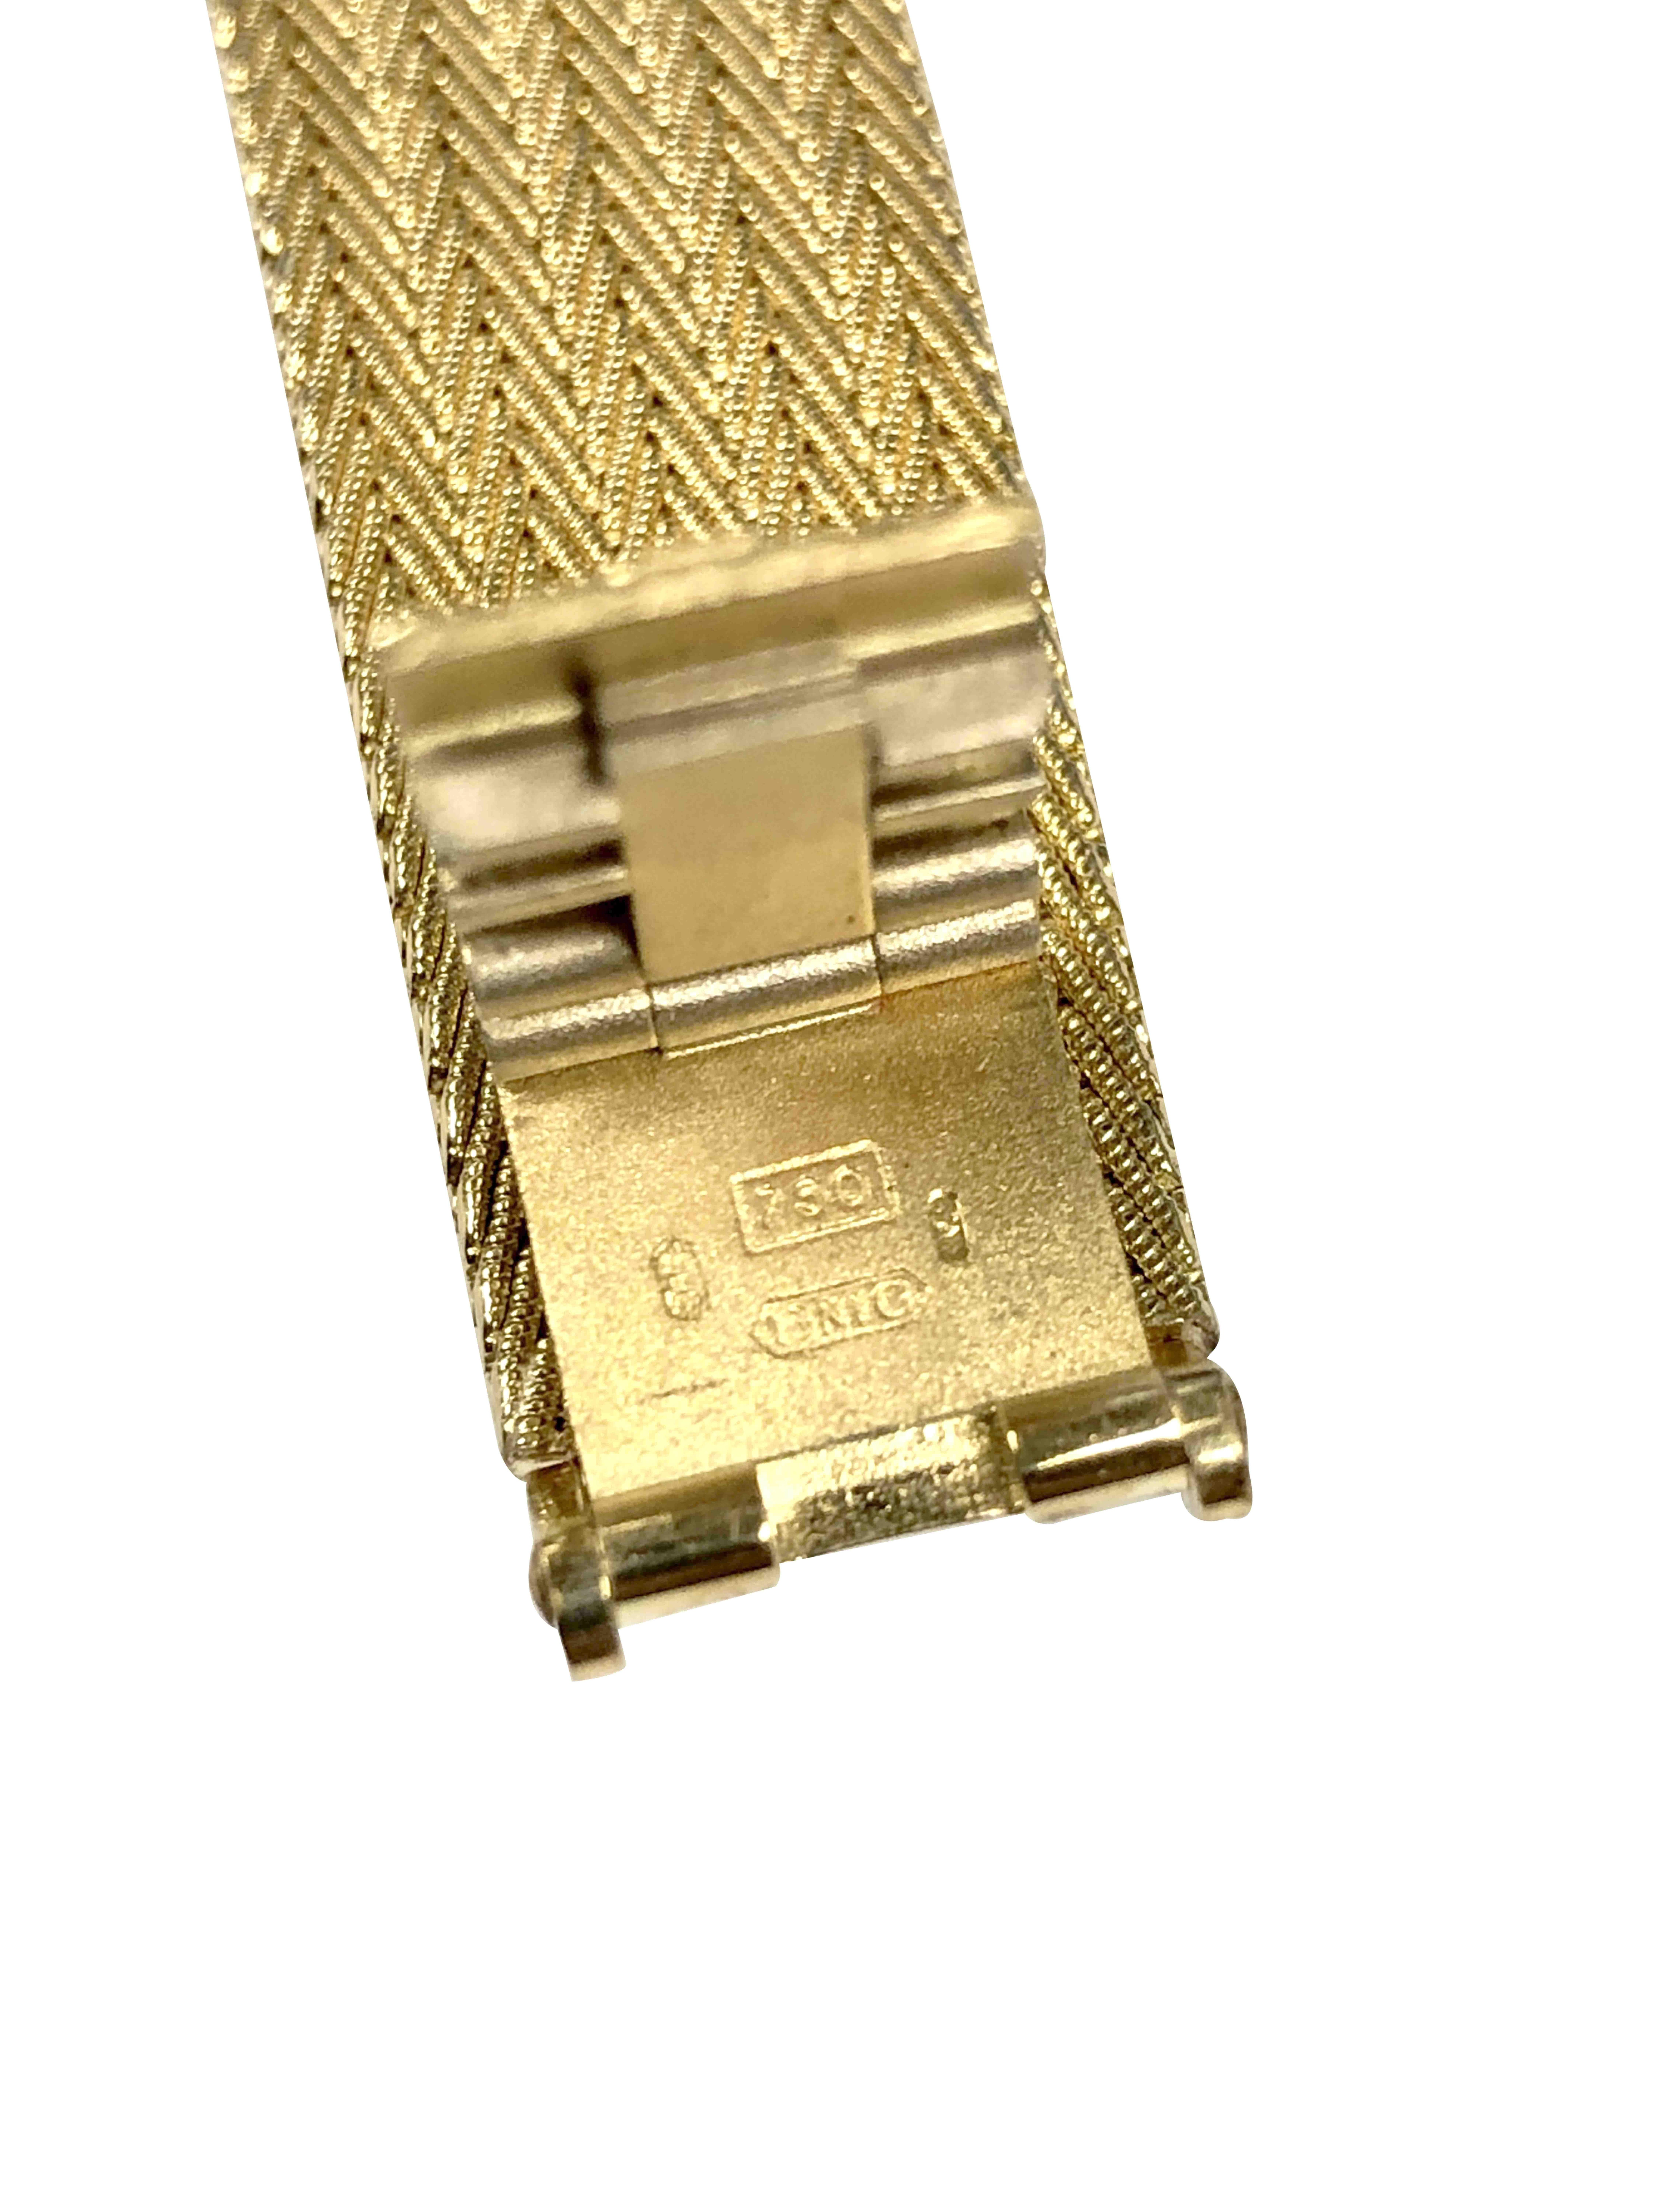 Baum & Mercier Gold Lapis Dial and Diamond Set Ladies Wristwatch 1